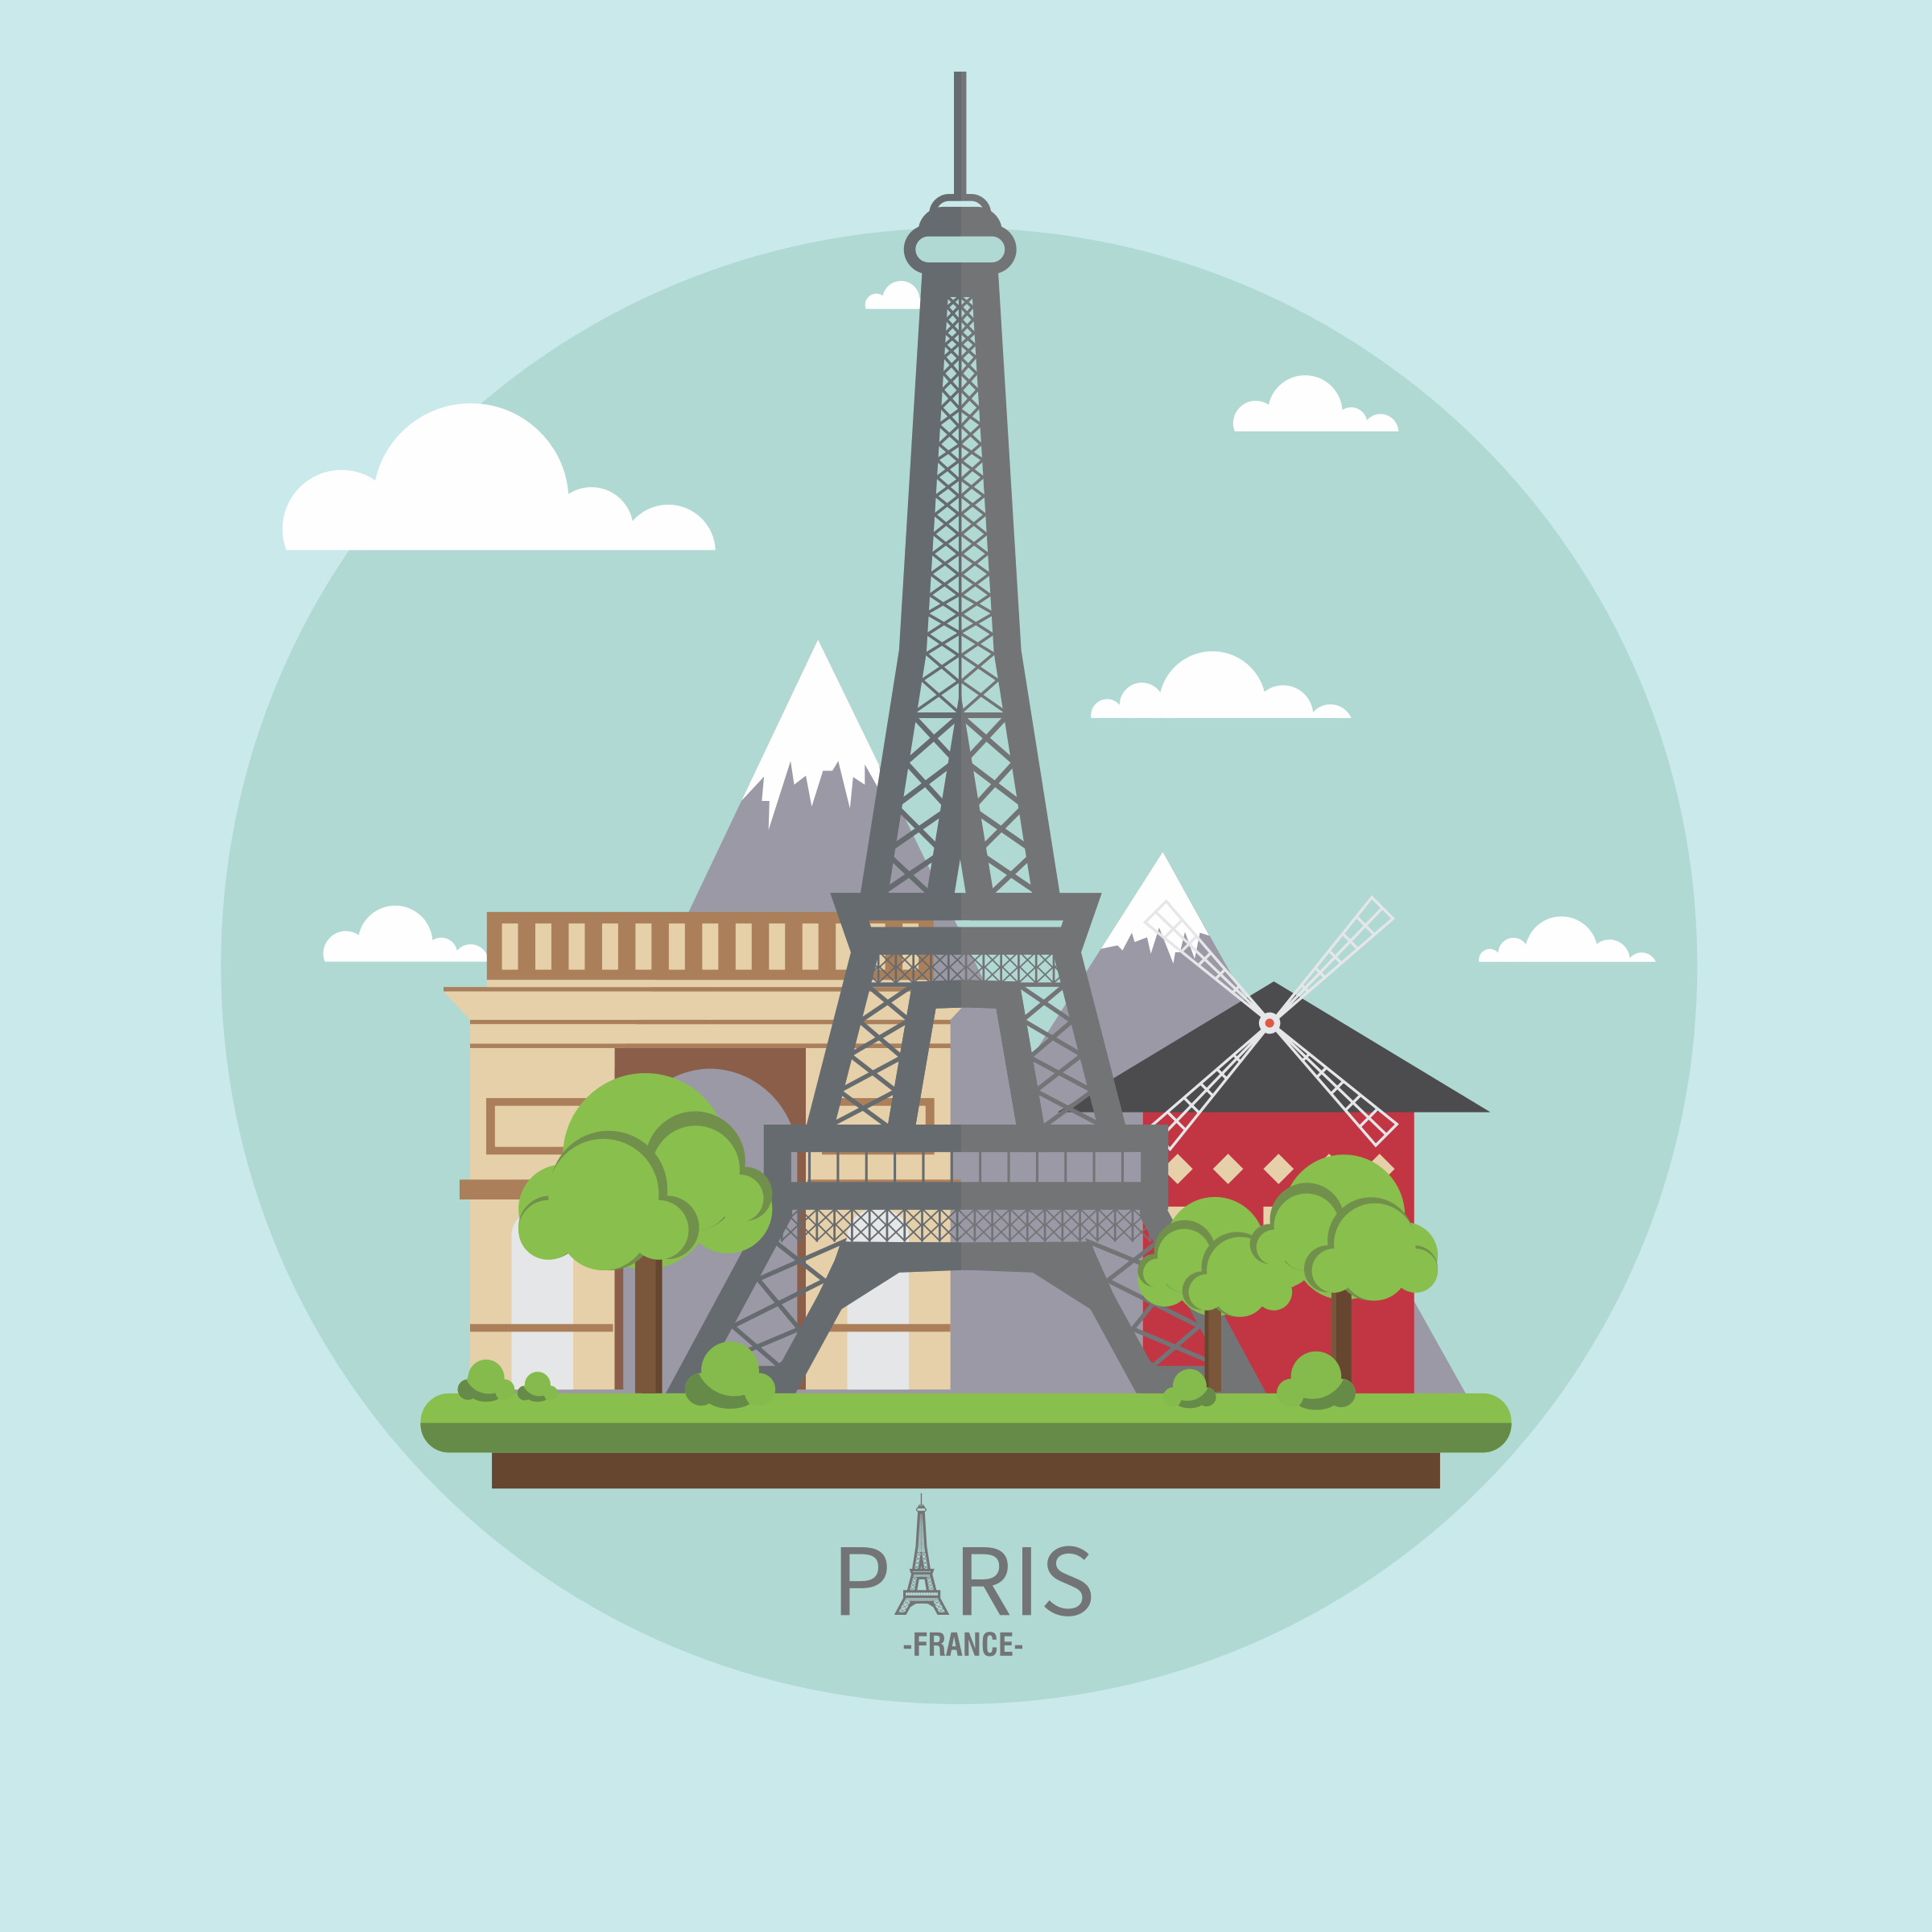 Paris big image png. France clipart landmarks